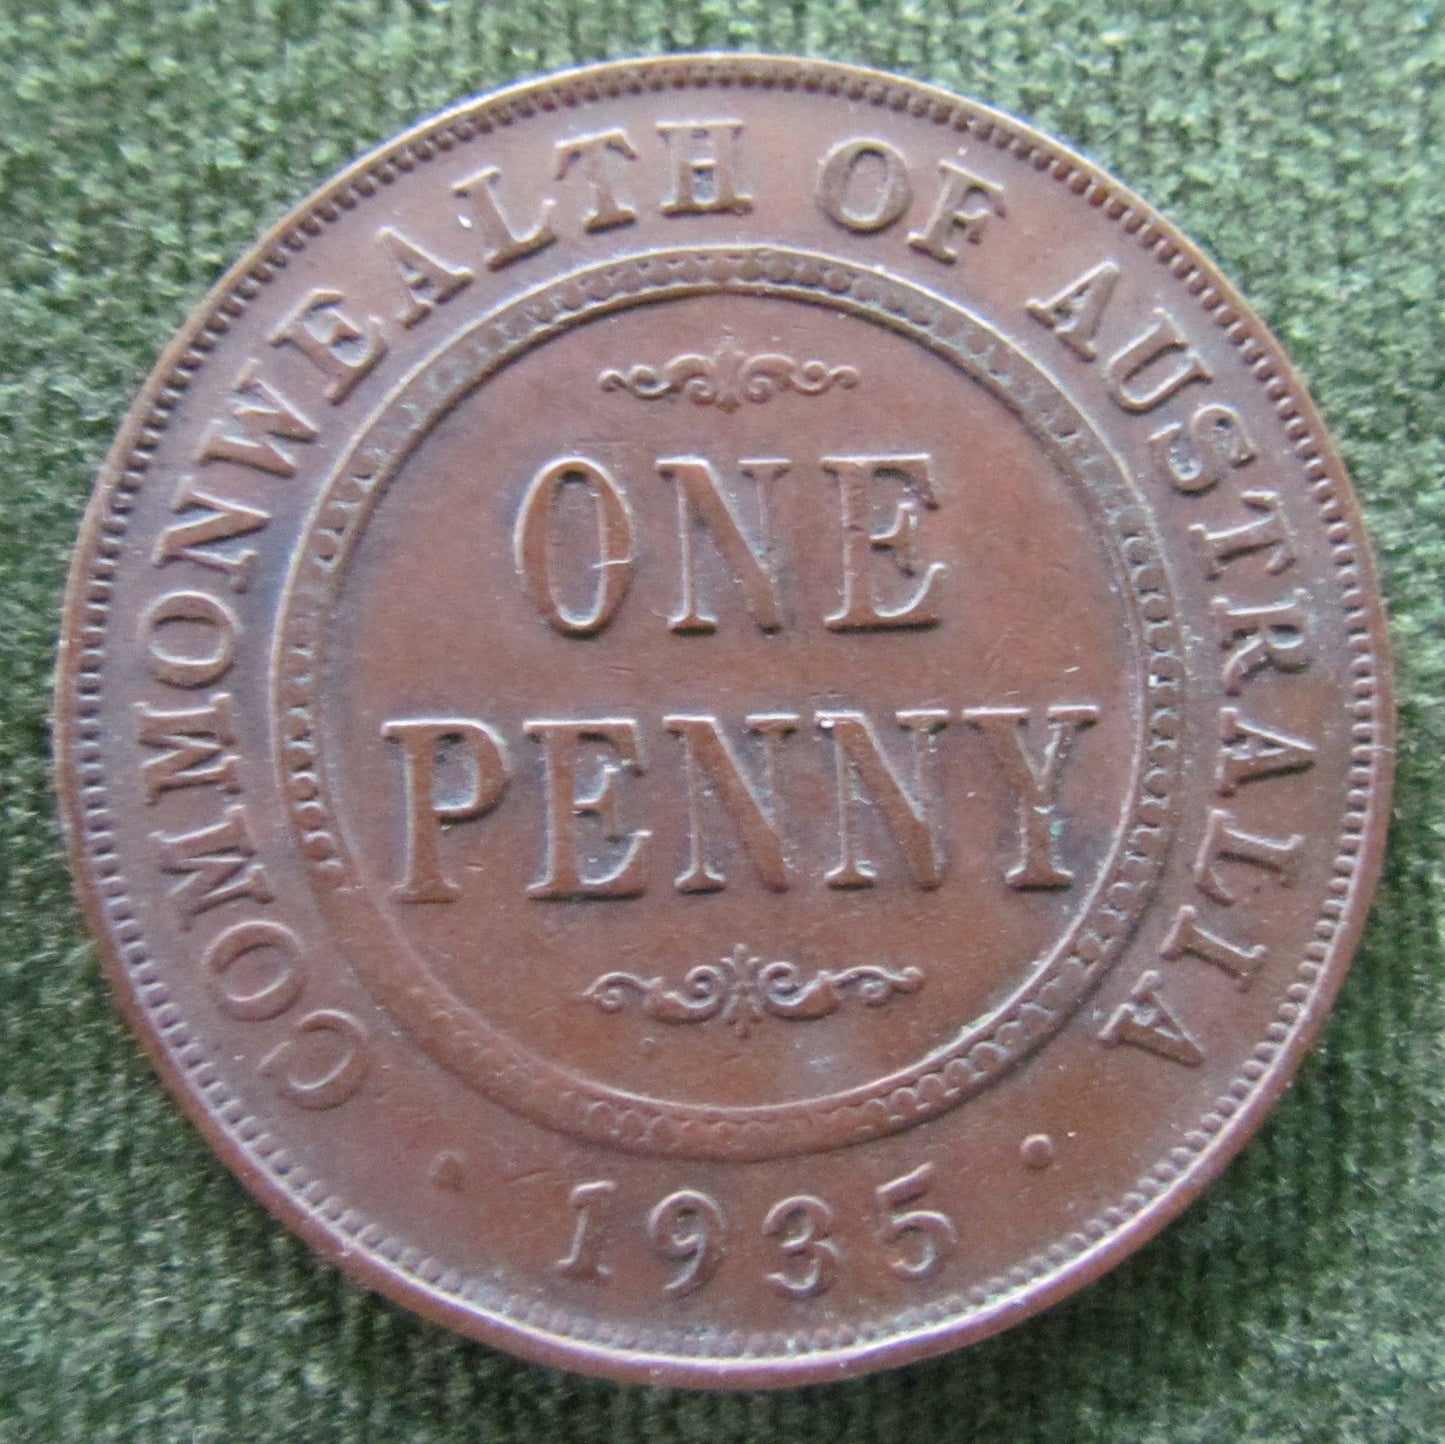 Australian 1935 1d 1 Penny King George V Coin